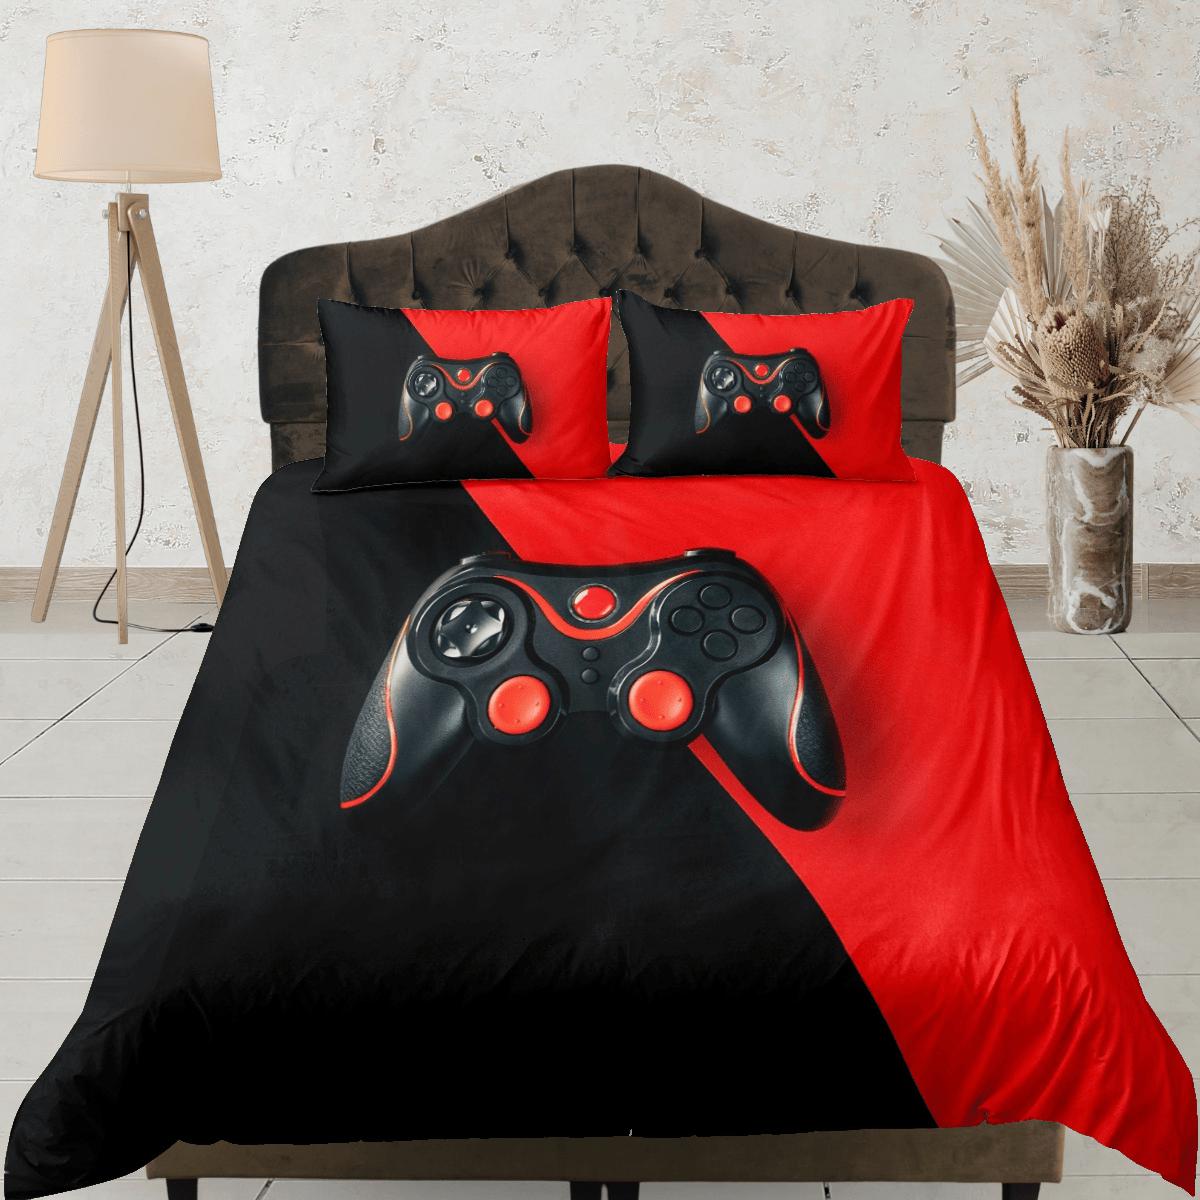 Dark Comforter With Dragon, Bedding Set in Black & Red Oriental